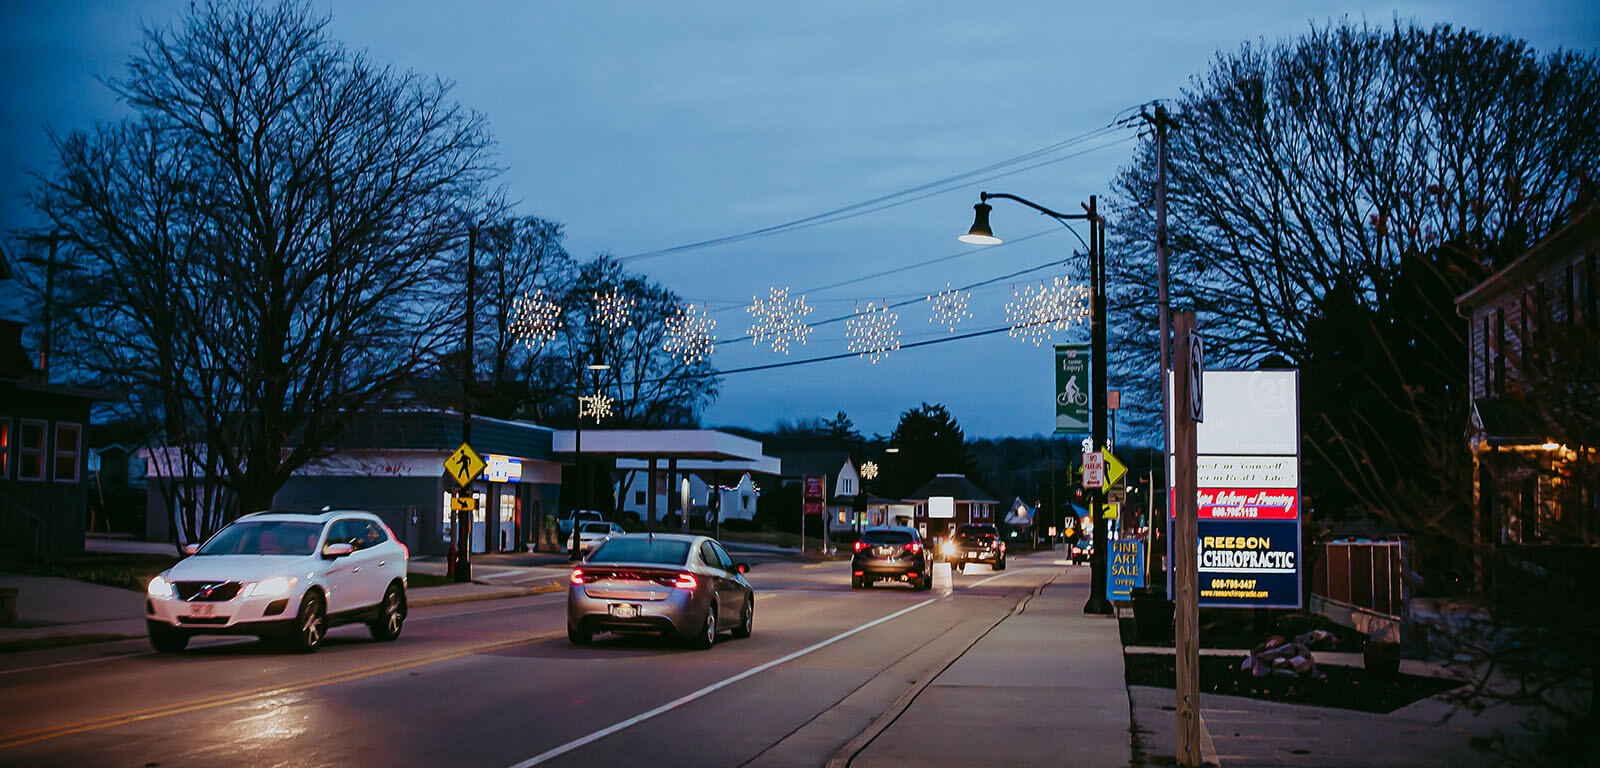 snowflake lights over street 1600